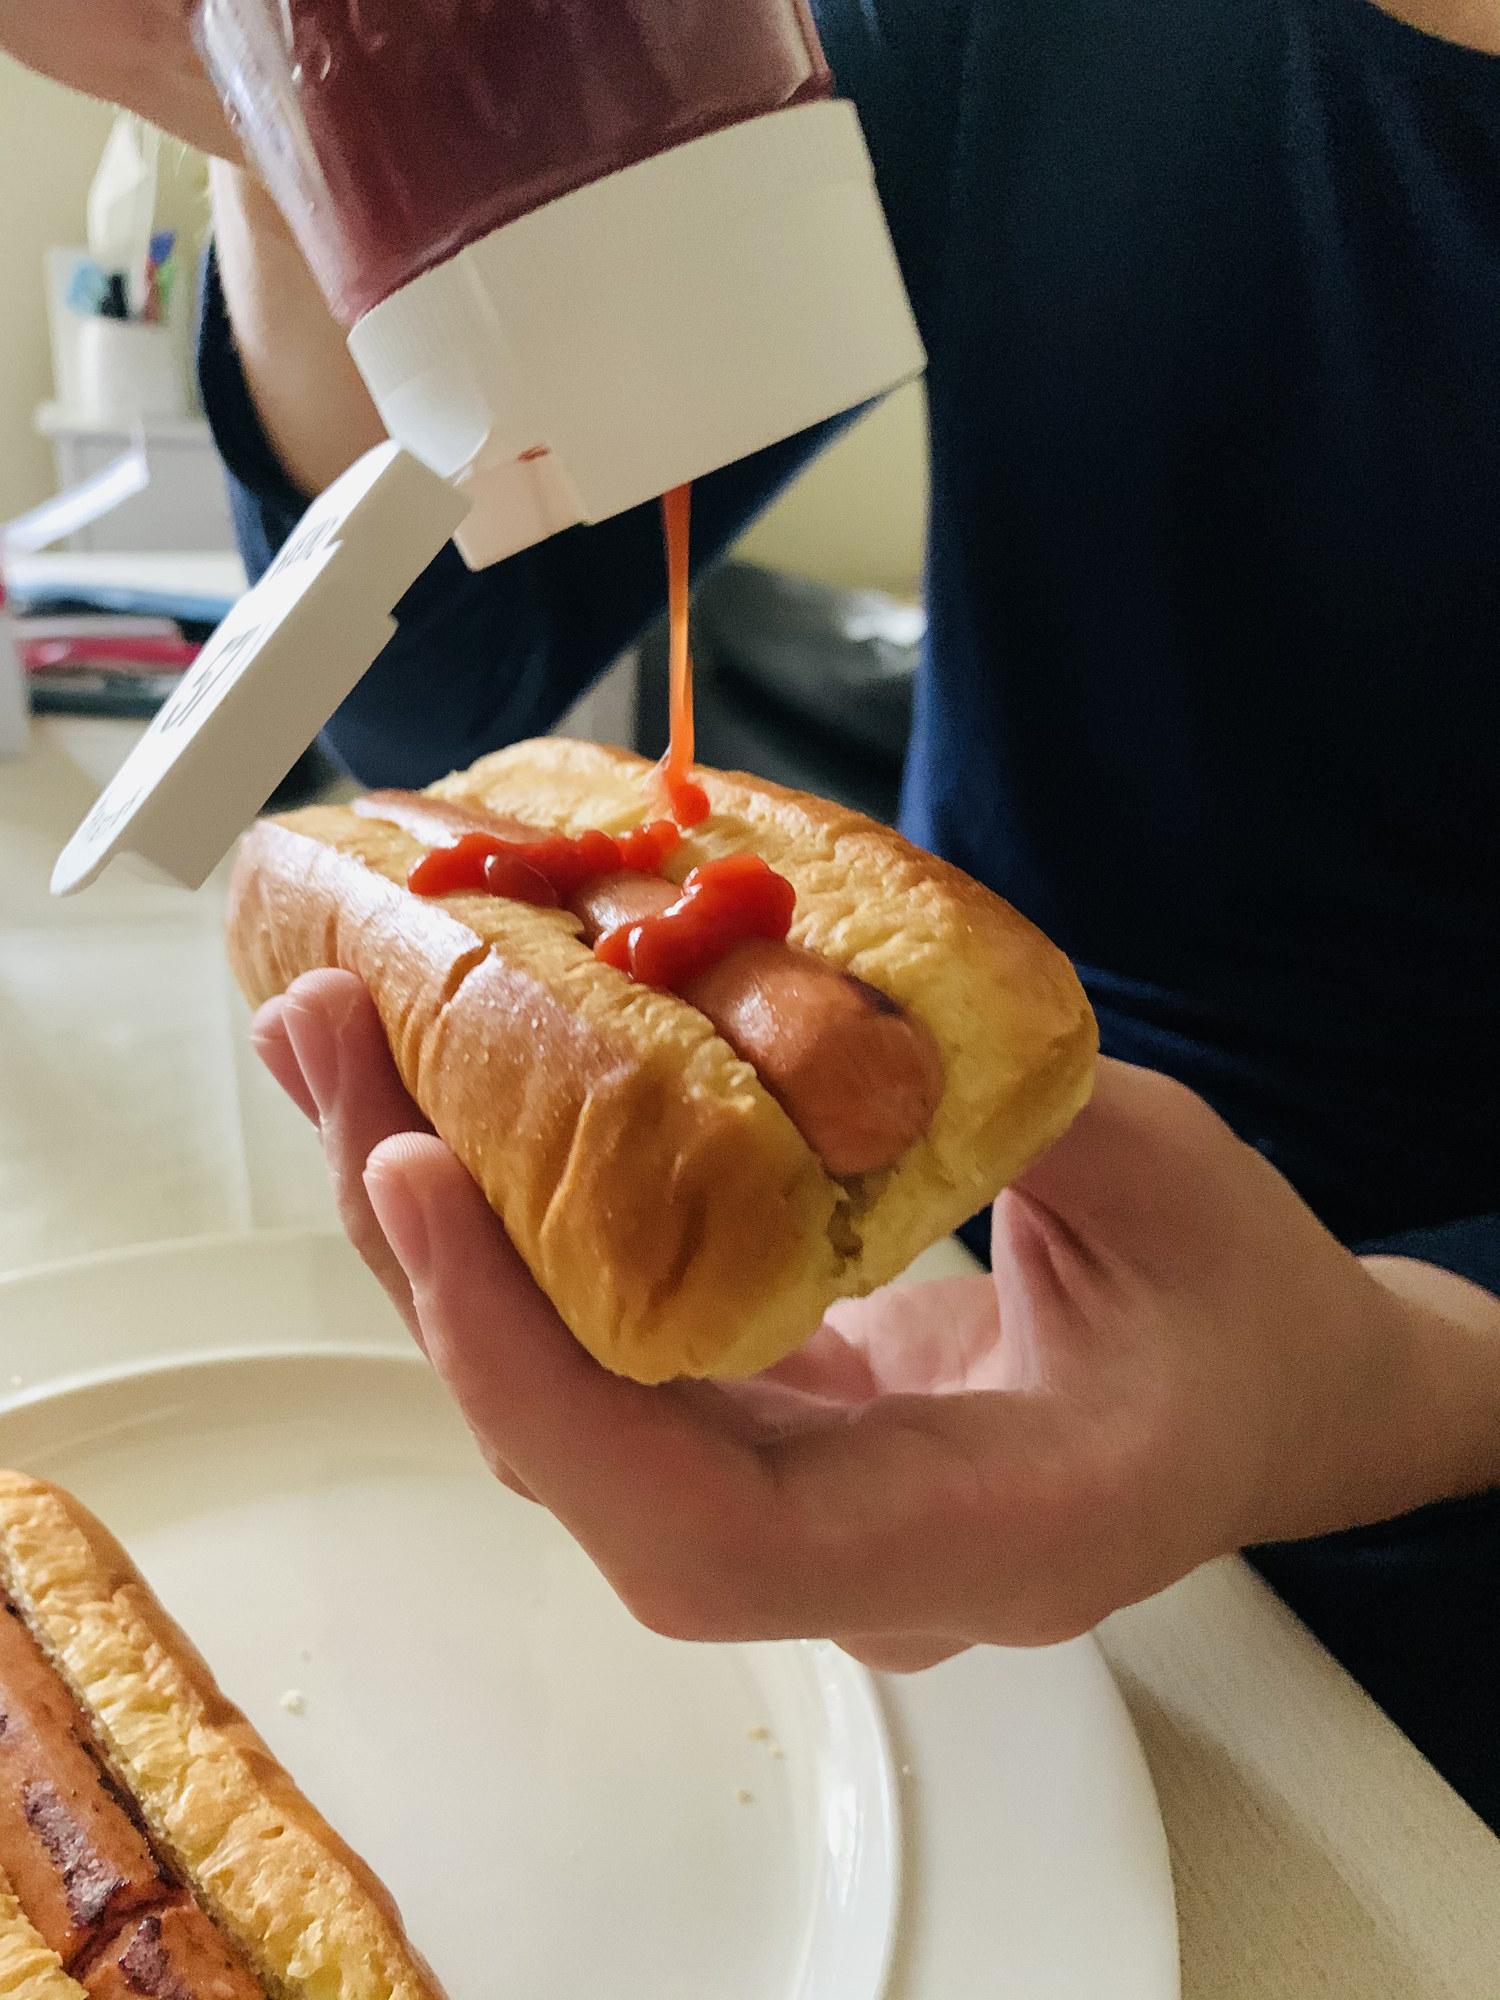 Squeezing ketchup on hotdog.